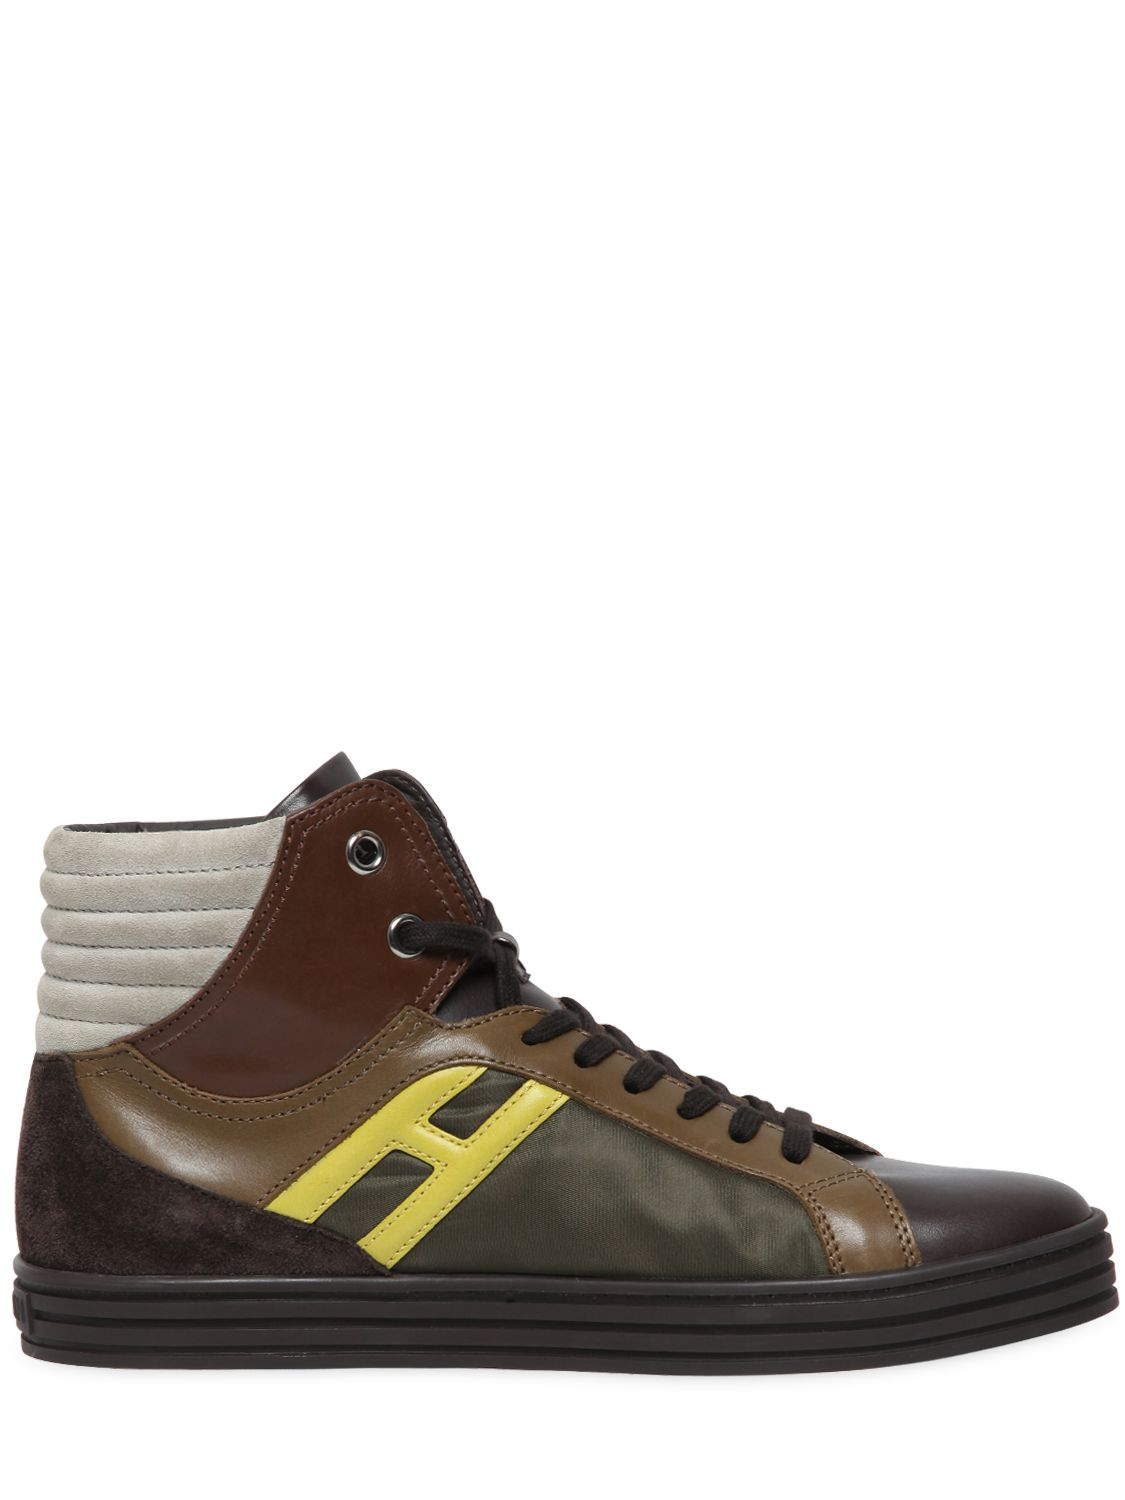 Hogan Rebel Nylon & Leather High Top Sneakers in Brown/Green (Brown ...